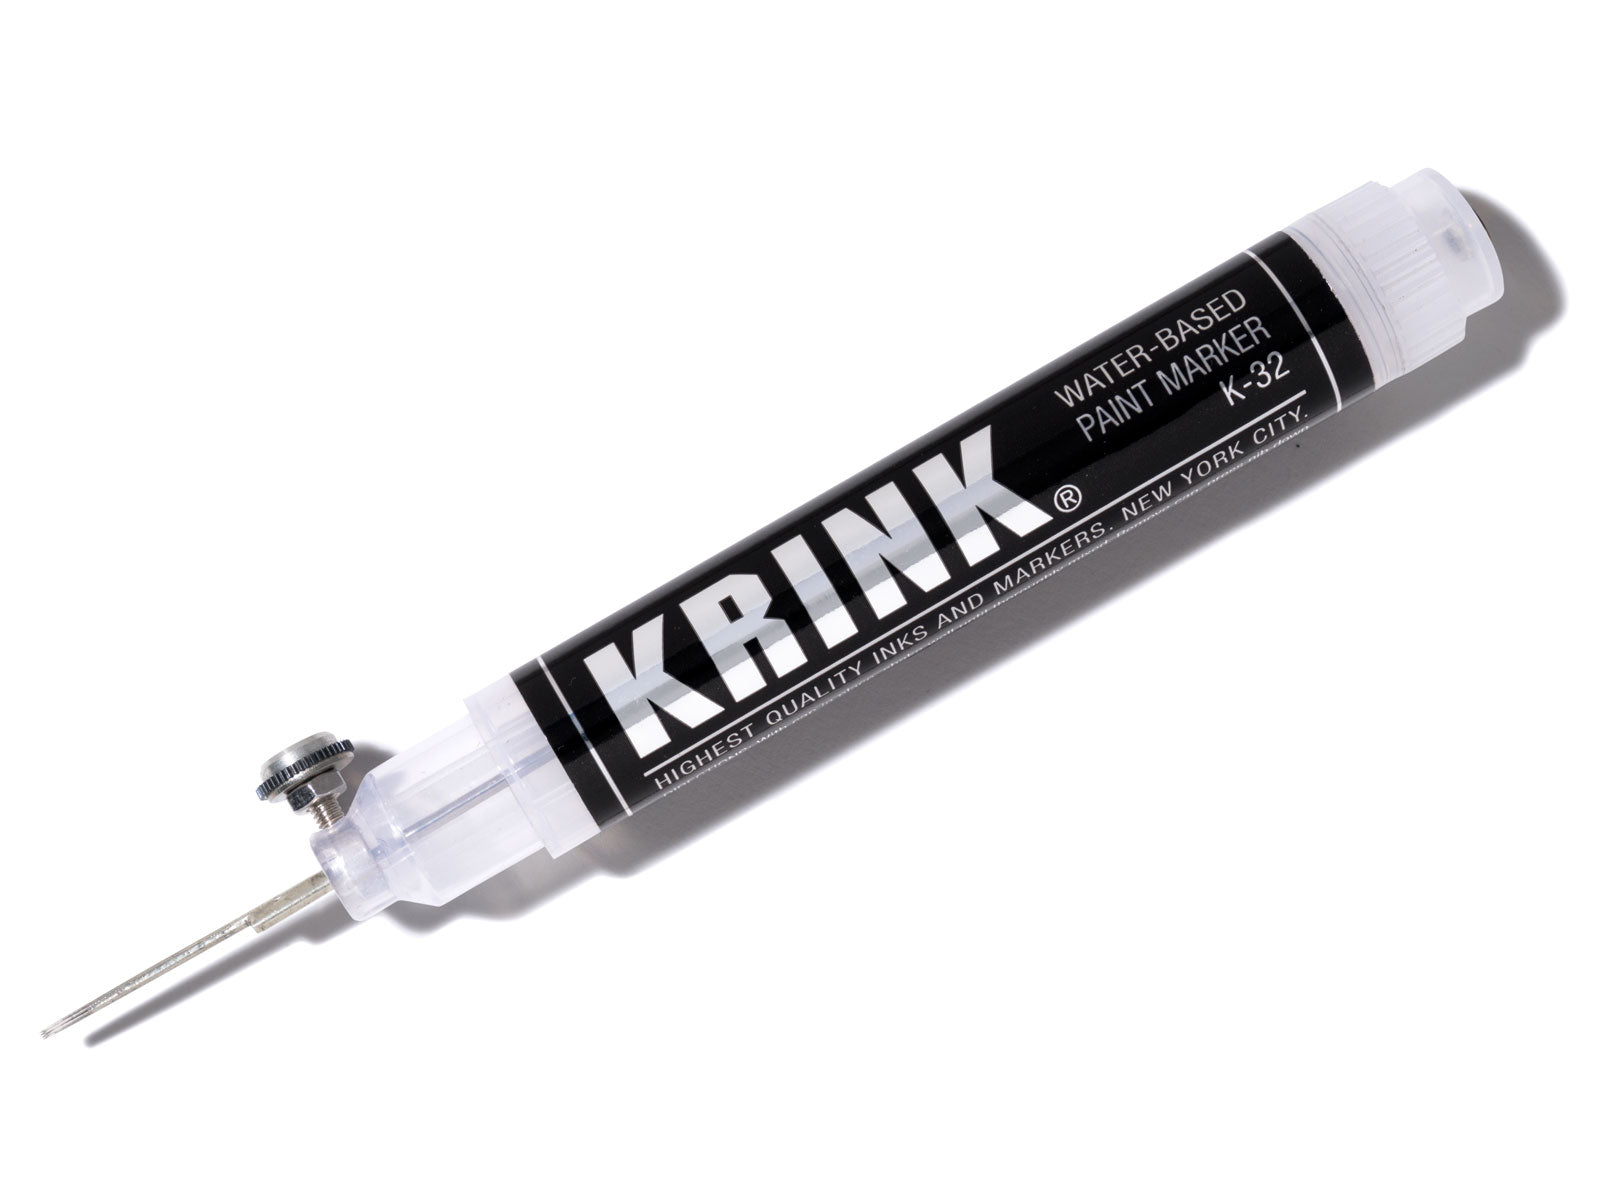 Krink exclusive Hand Poke Tattoo Tool by Kaput Handmade